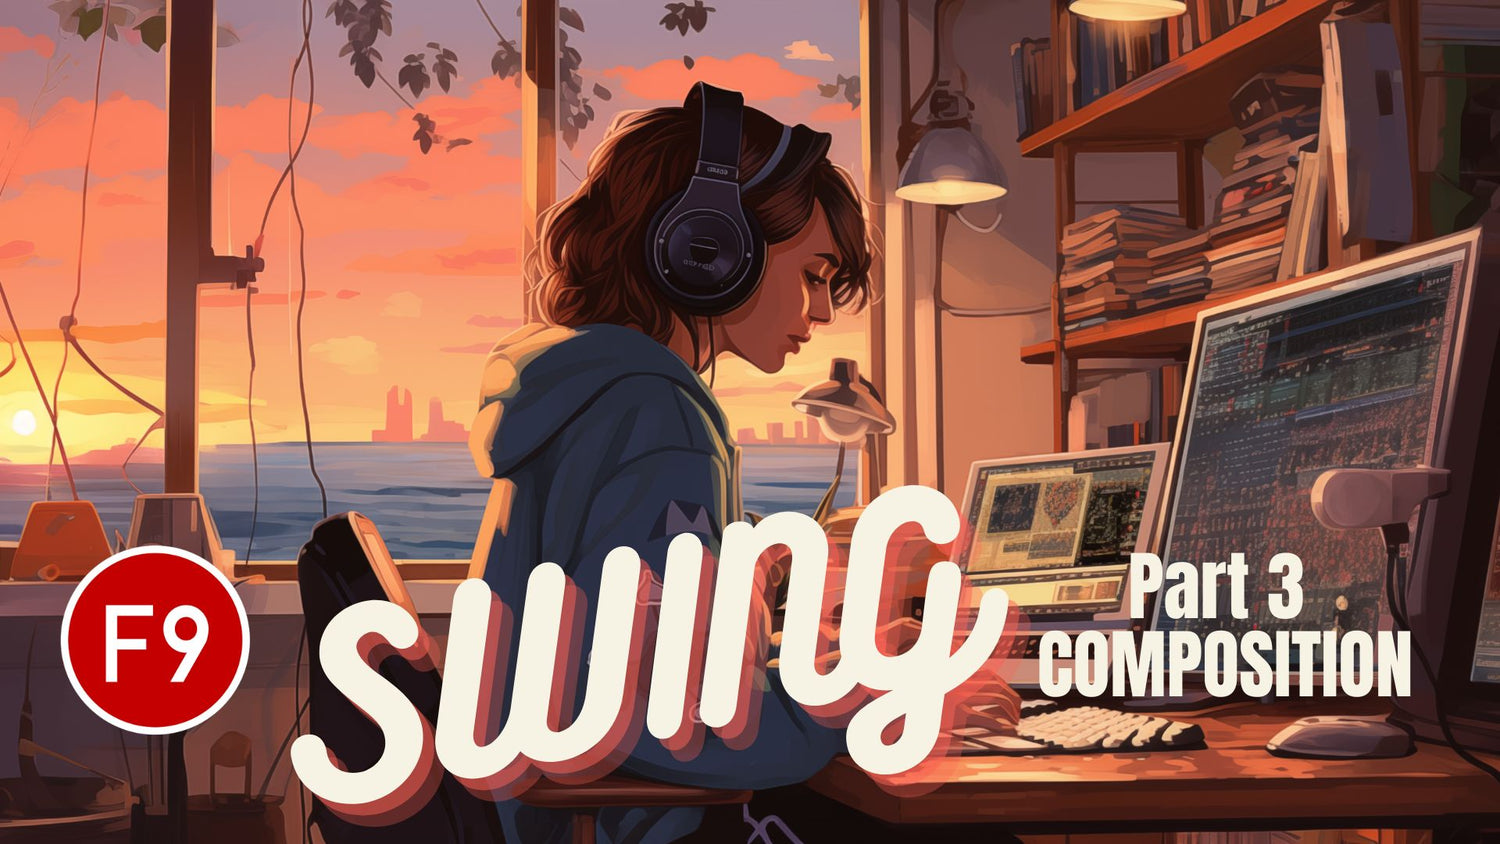 F9 Audio: The Secrets of Swing Part 3 - Composition